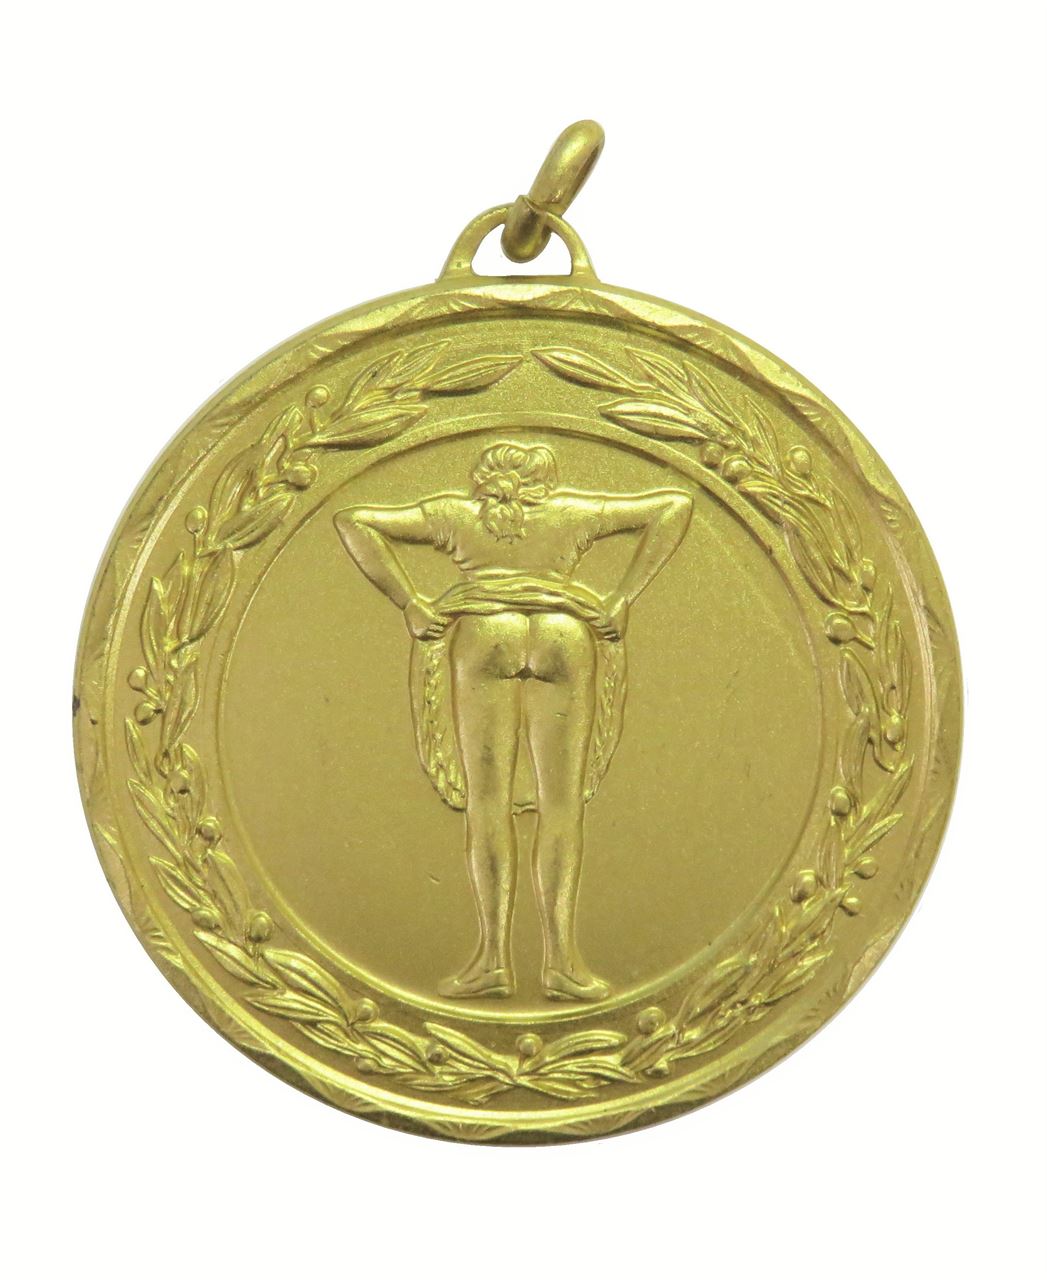 Gold Laurel Economy Bottom Place Medal (size: 50mm) - 4330E